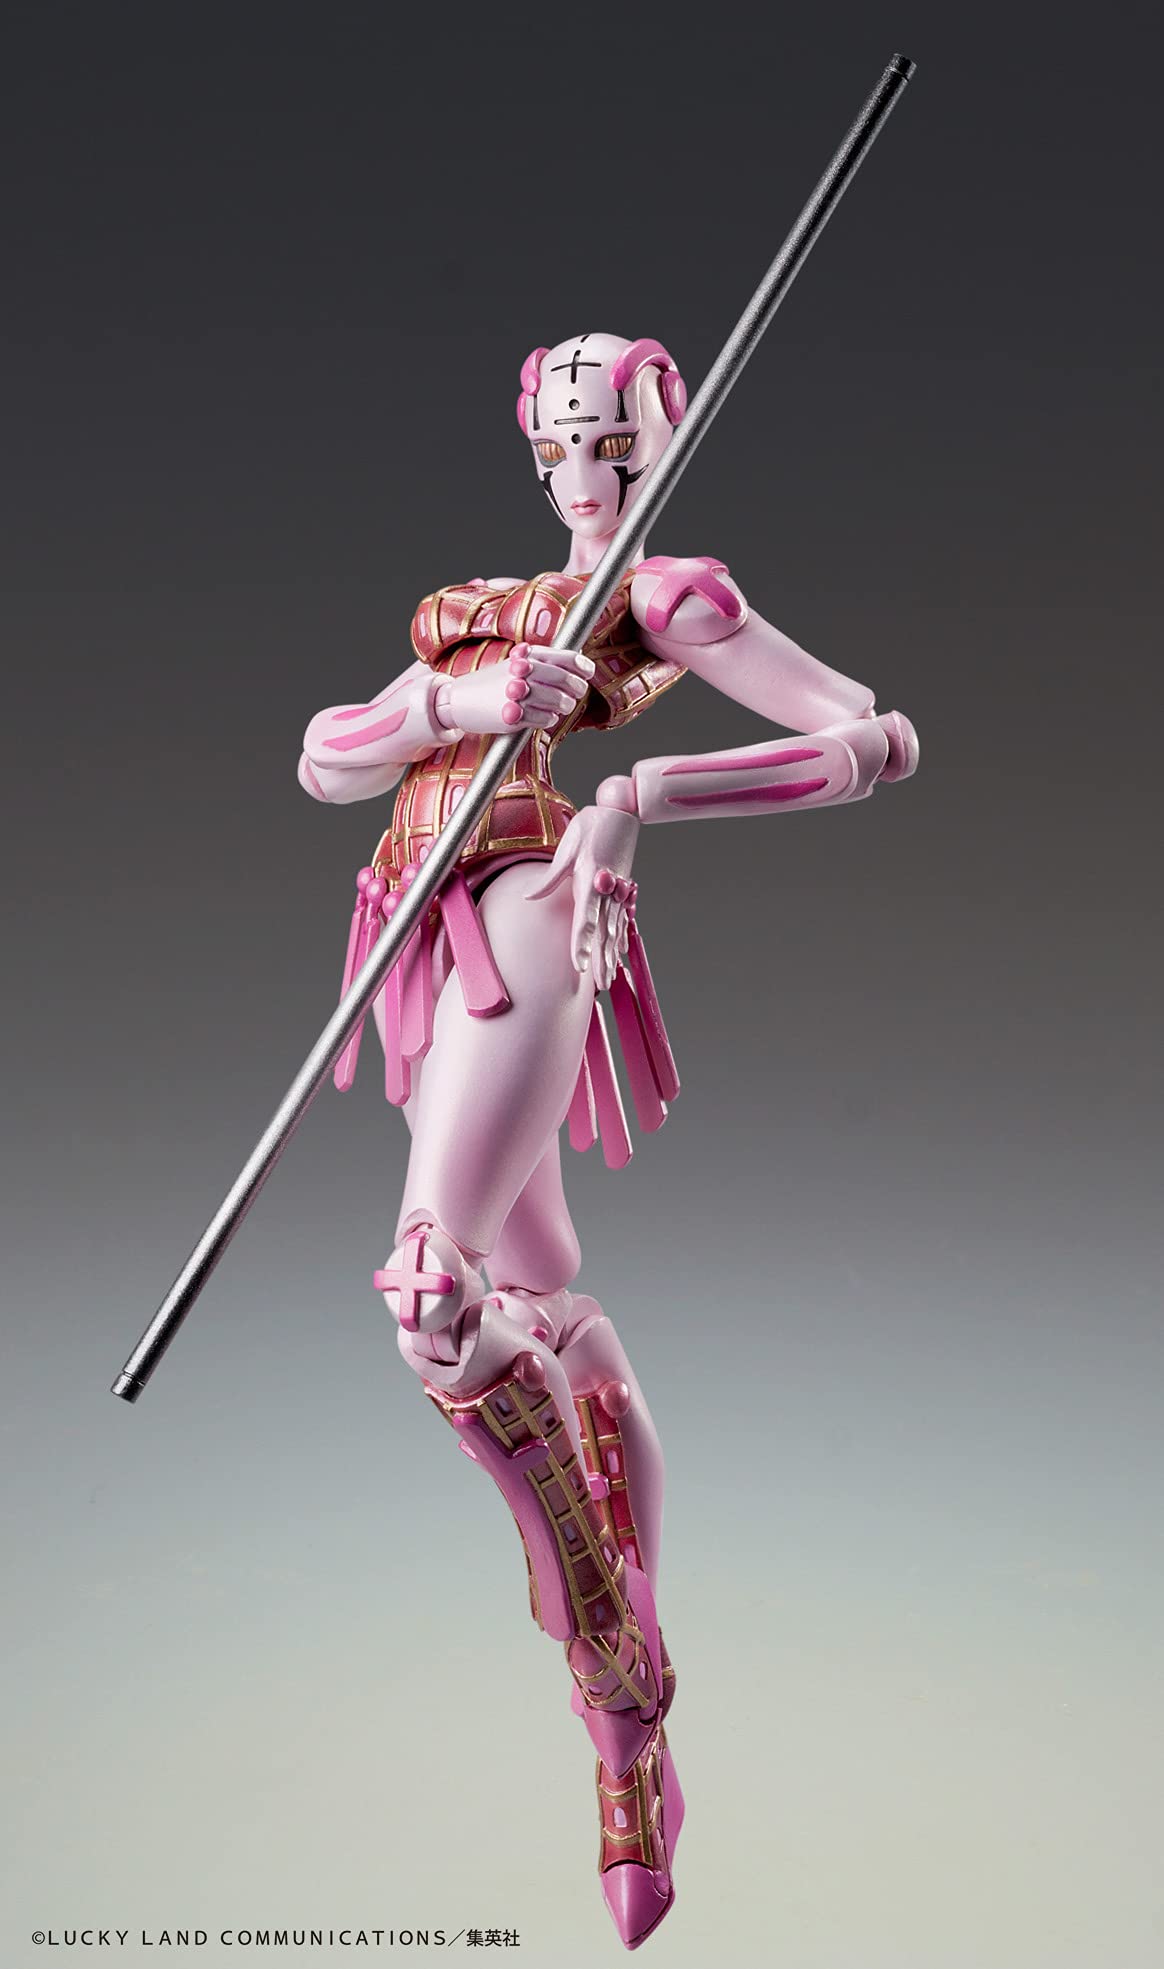 MediCos JoJo’s Bizarre Adventure Part 5: Chozo Kado Spice Girl Super Action Statue Figure, Multicolor